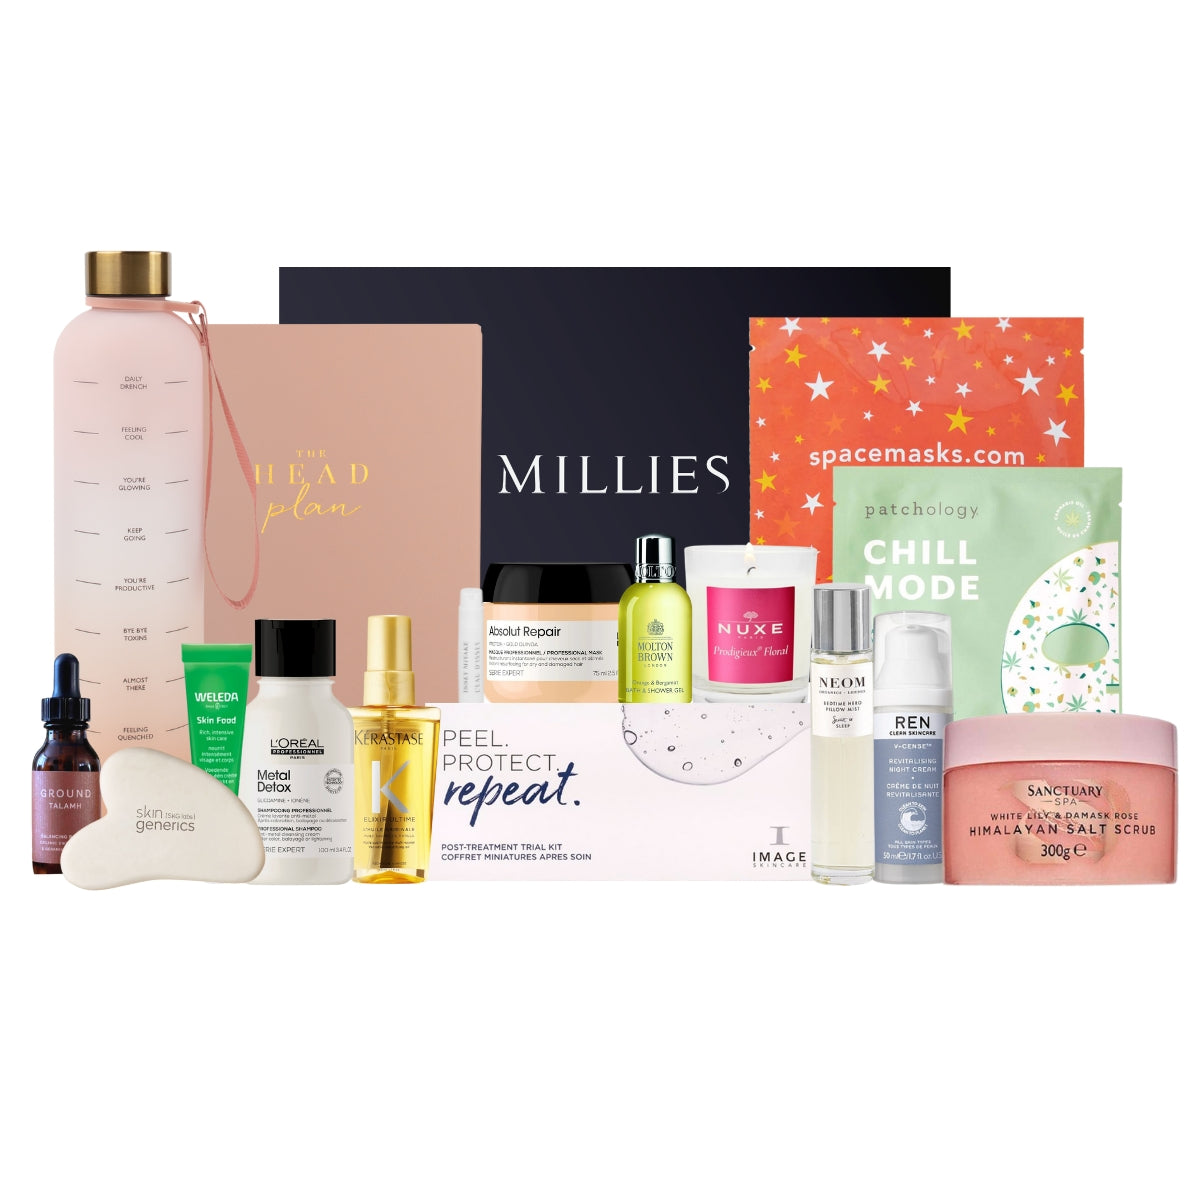 Millies X The Head Plan Ultimate Wellness Beauty Box